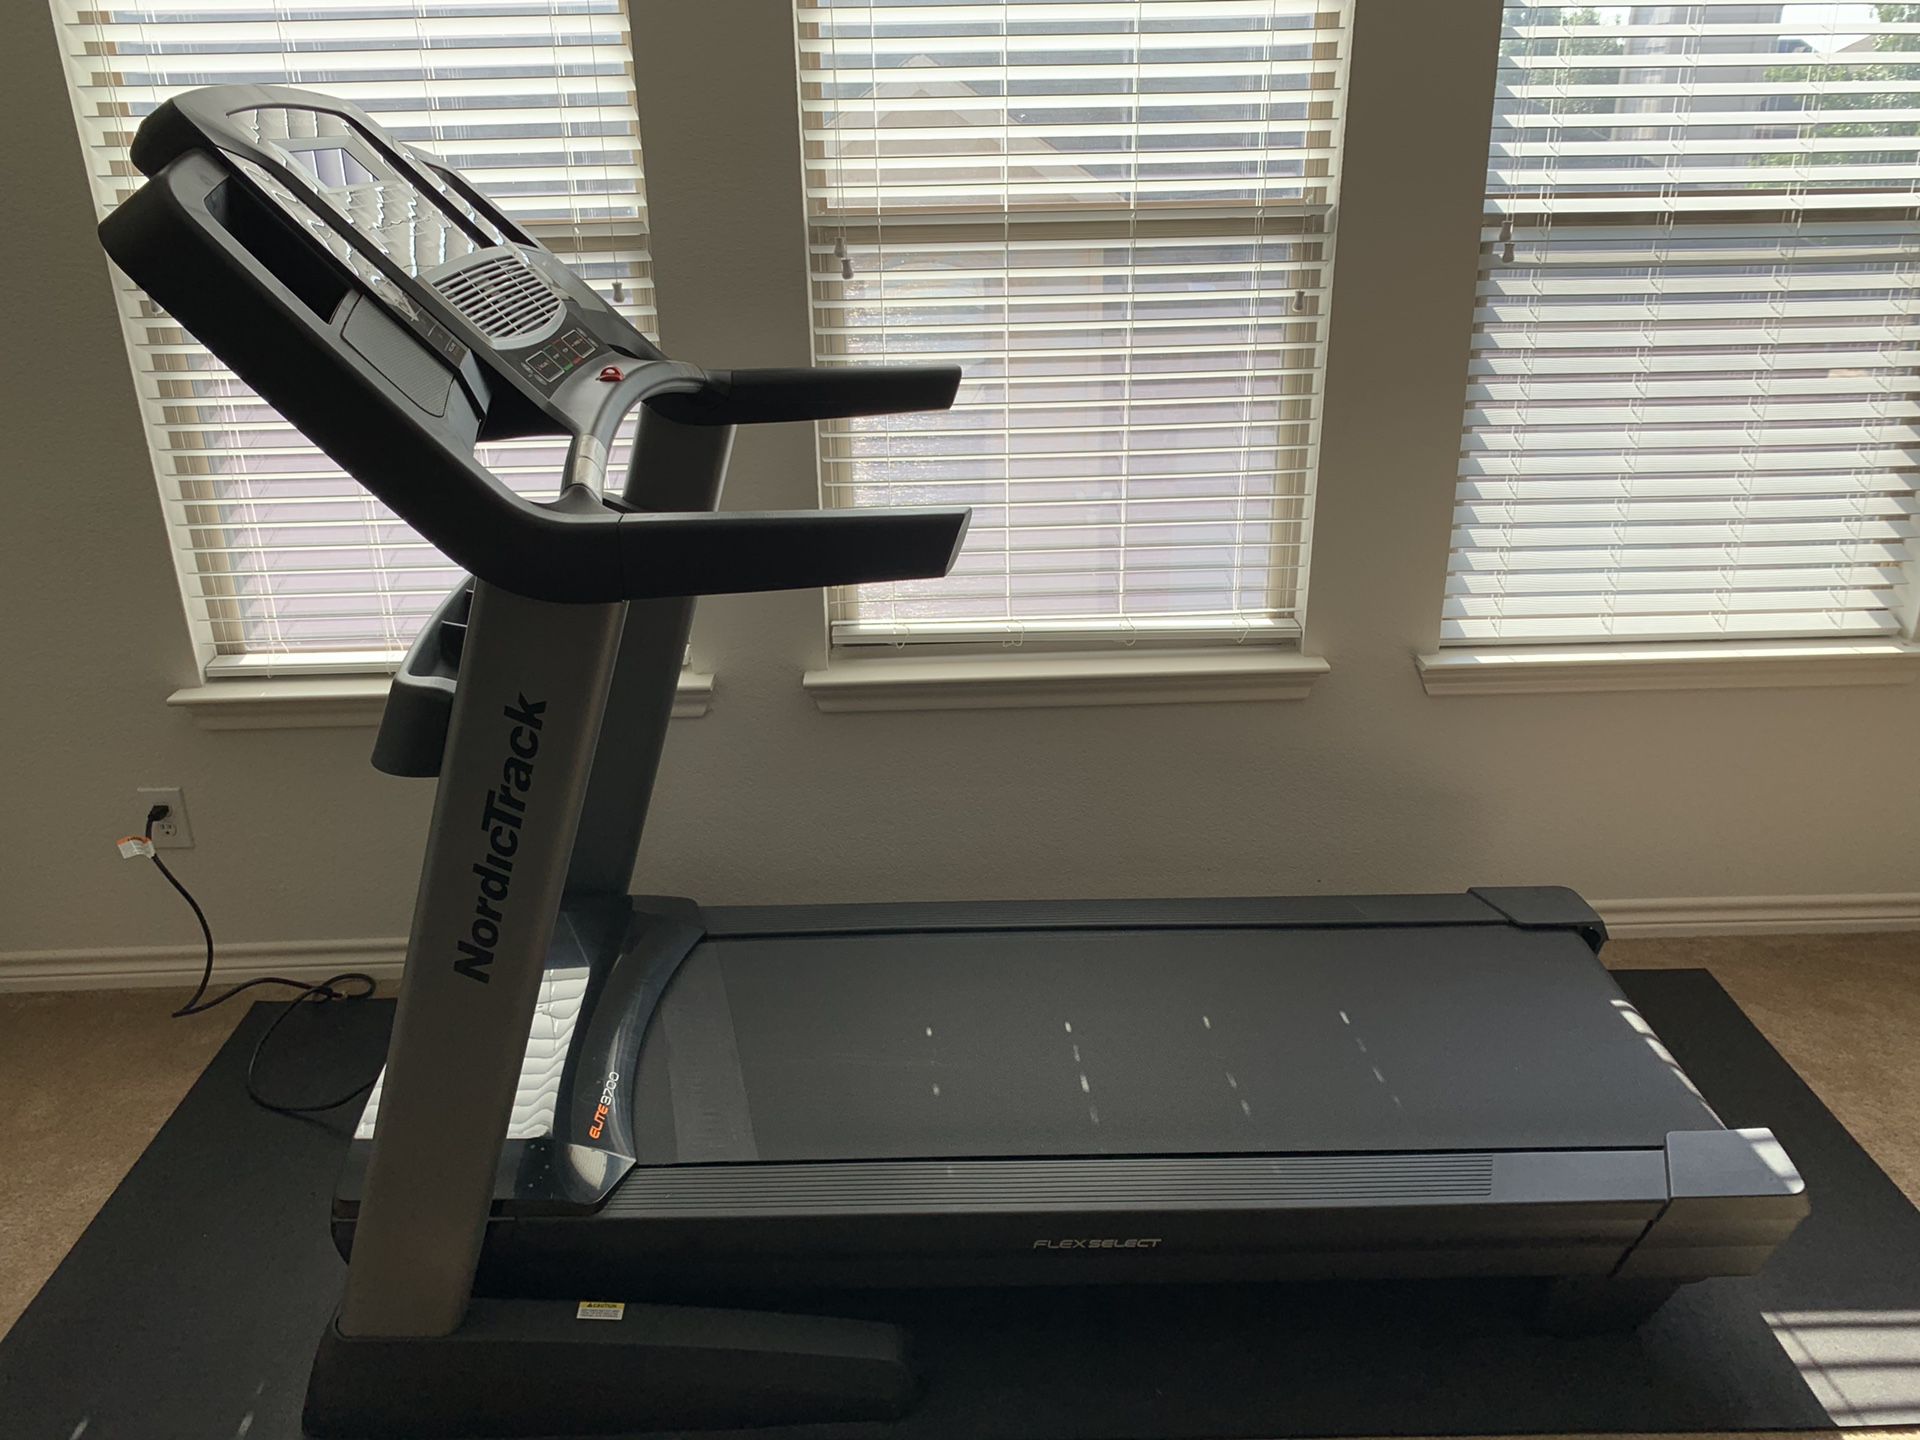 NordicTrack Elite 3700 Treadmill